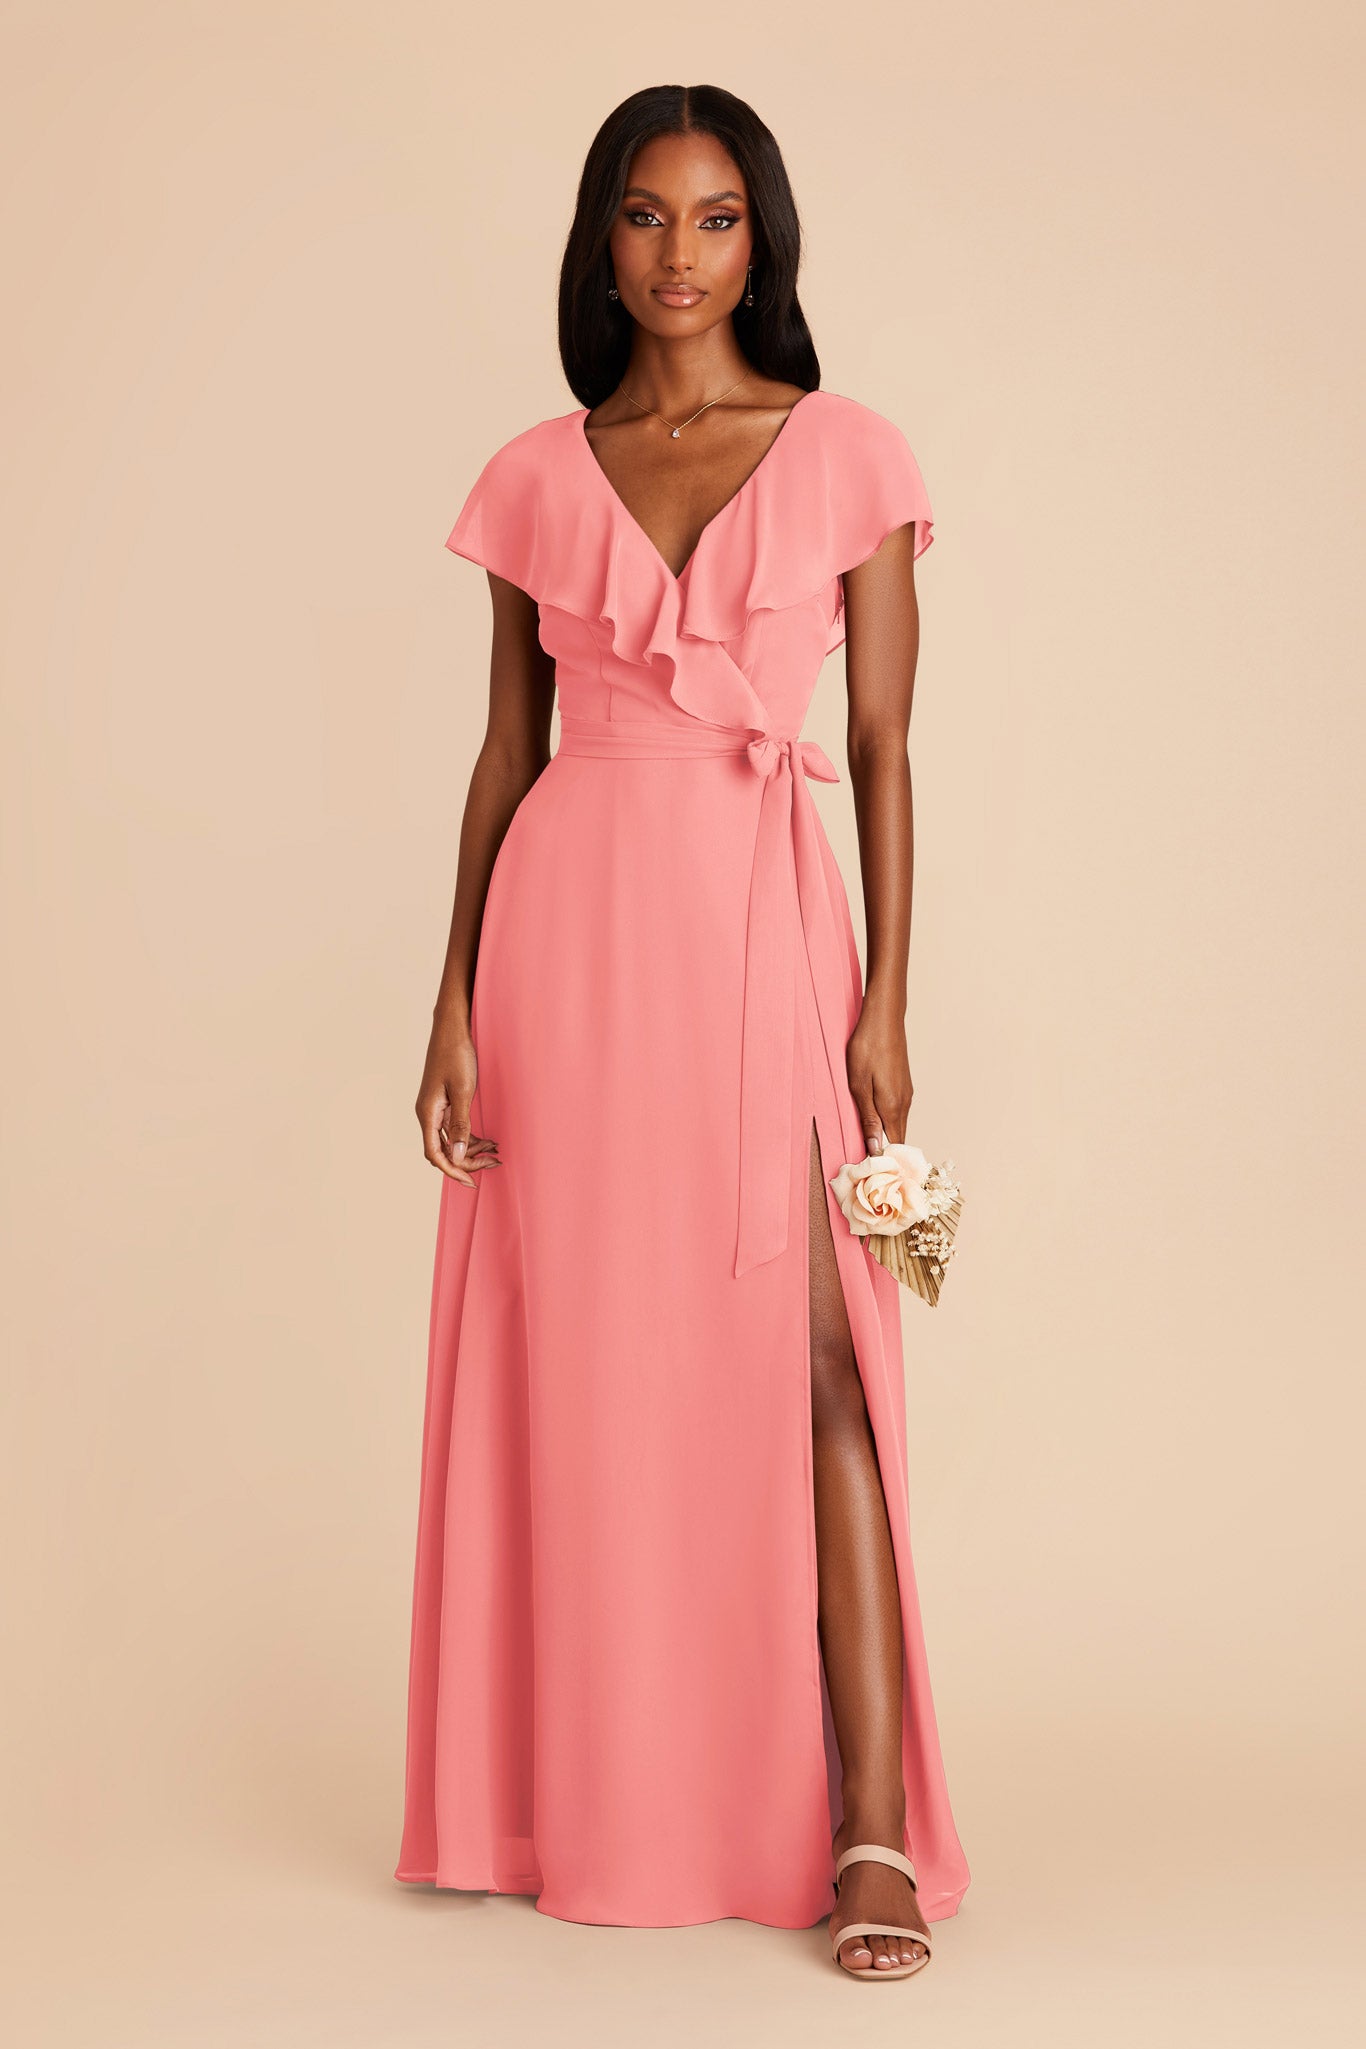 Coral Pink Jackson Chiffon Dress by Birdy Grey